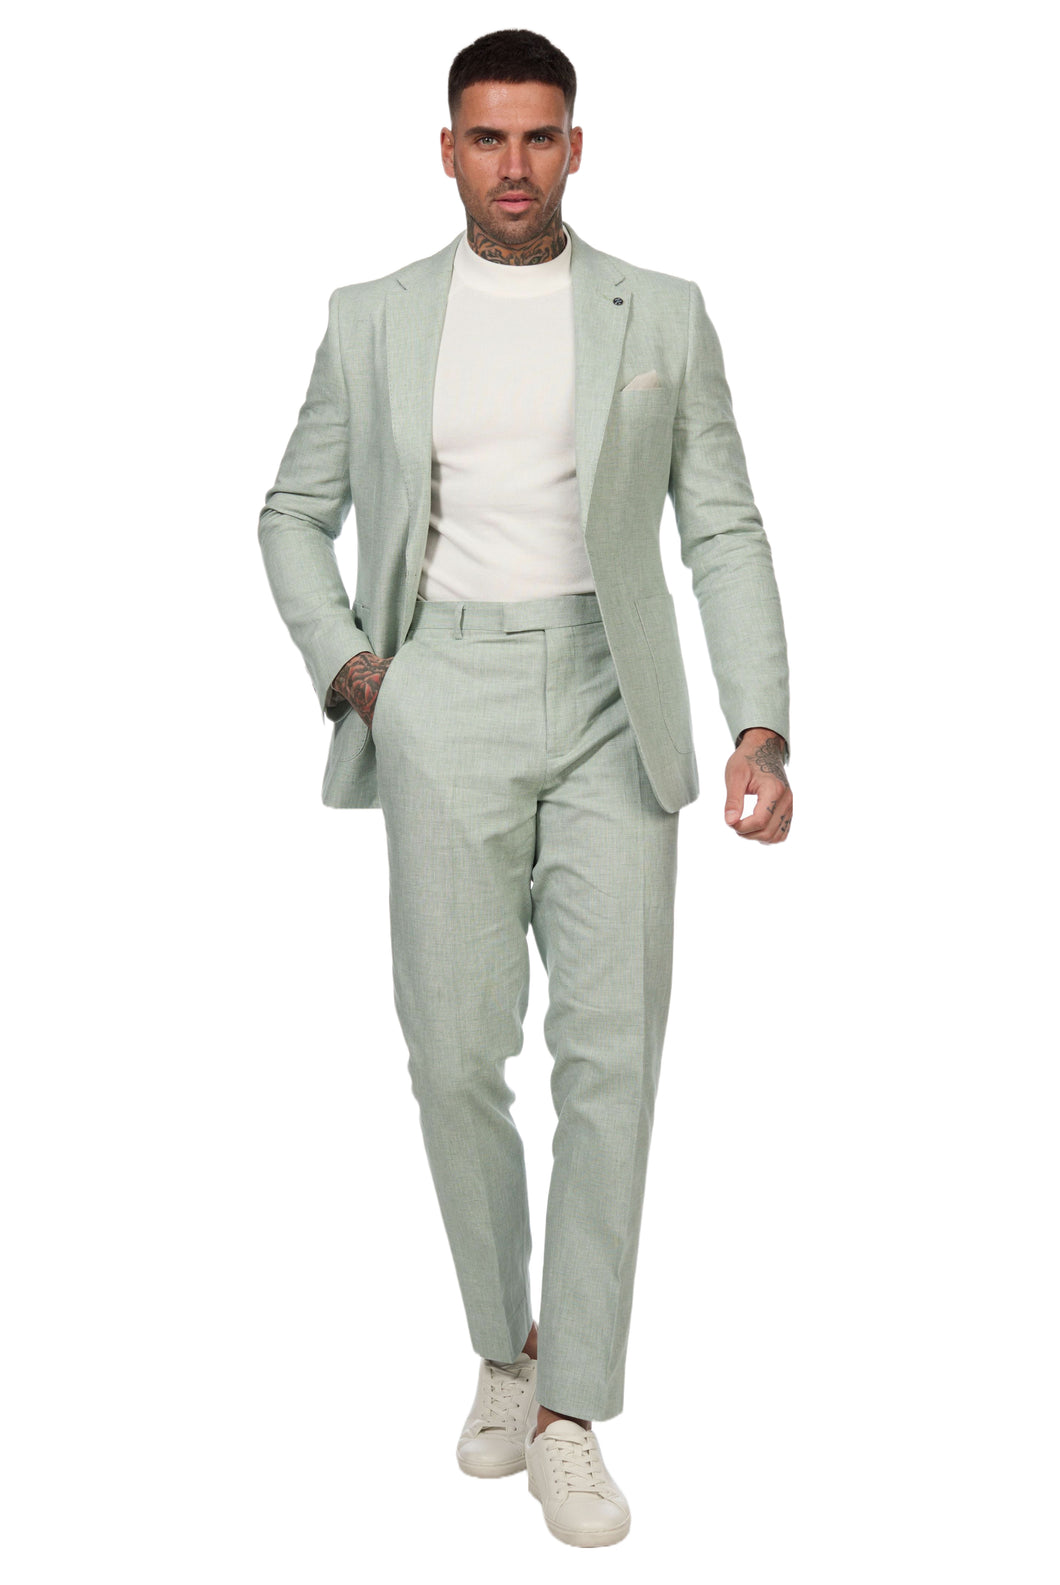 Lukus Two Piece Linen Suit in Light Green RRP £299